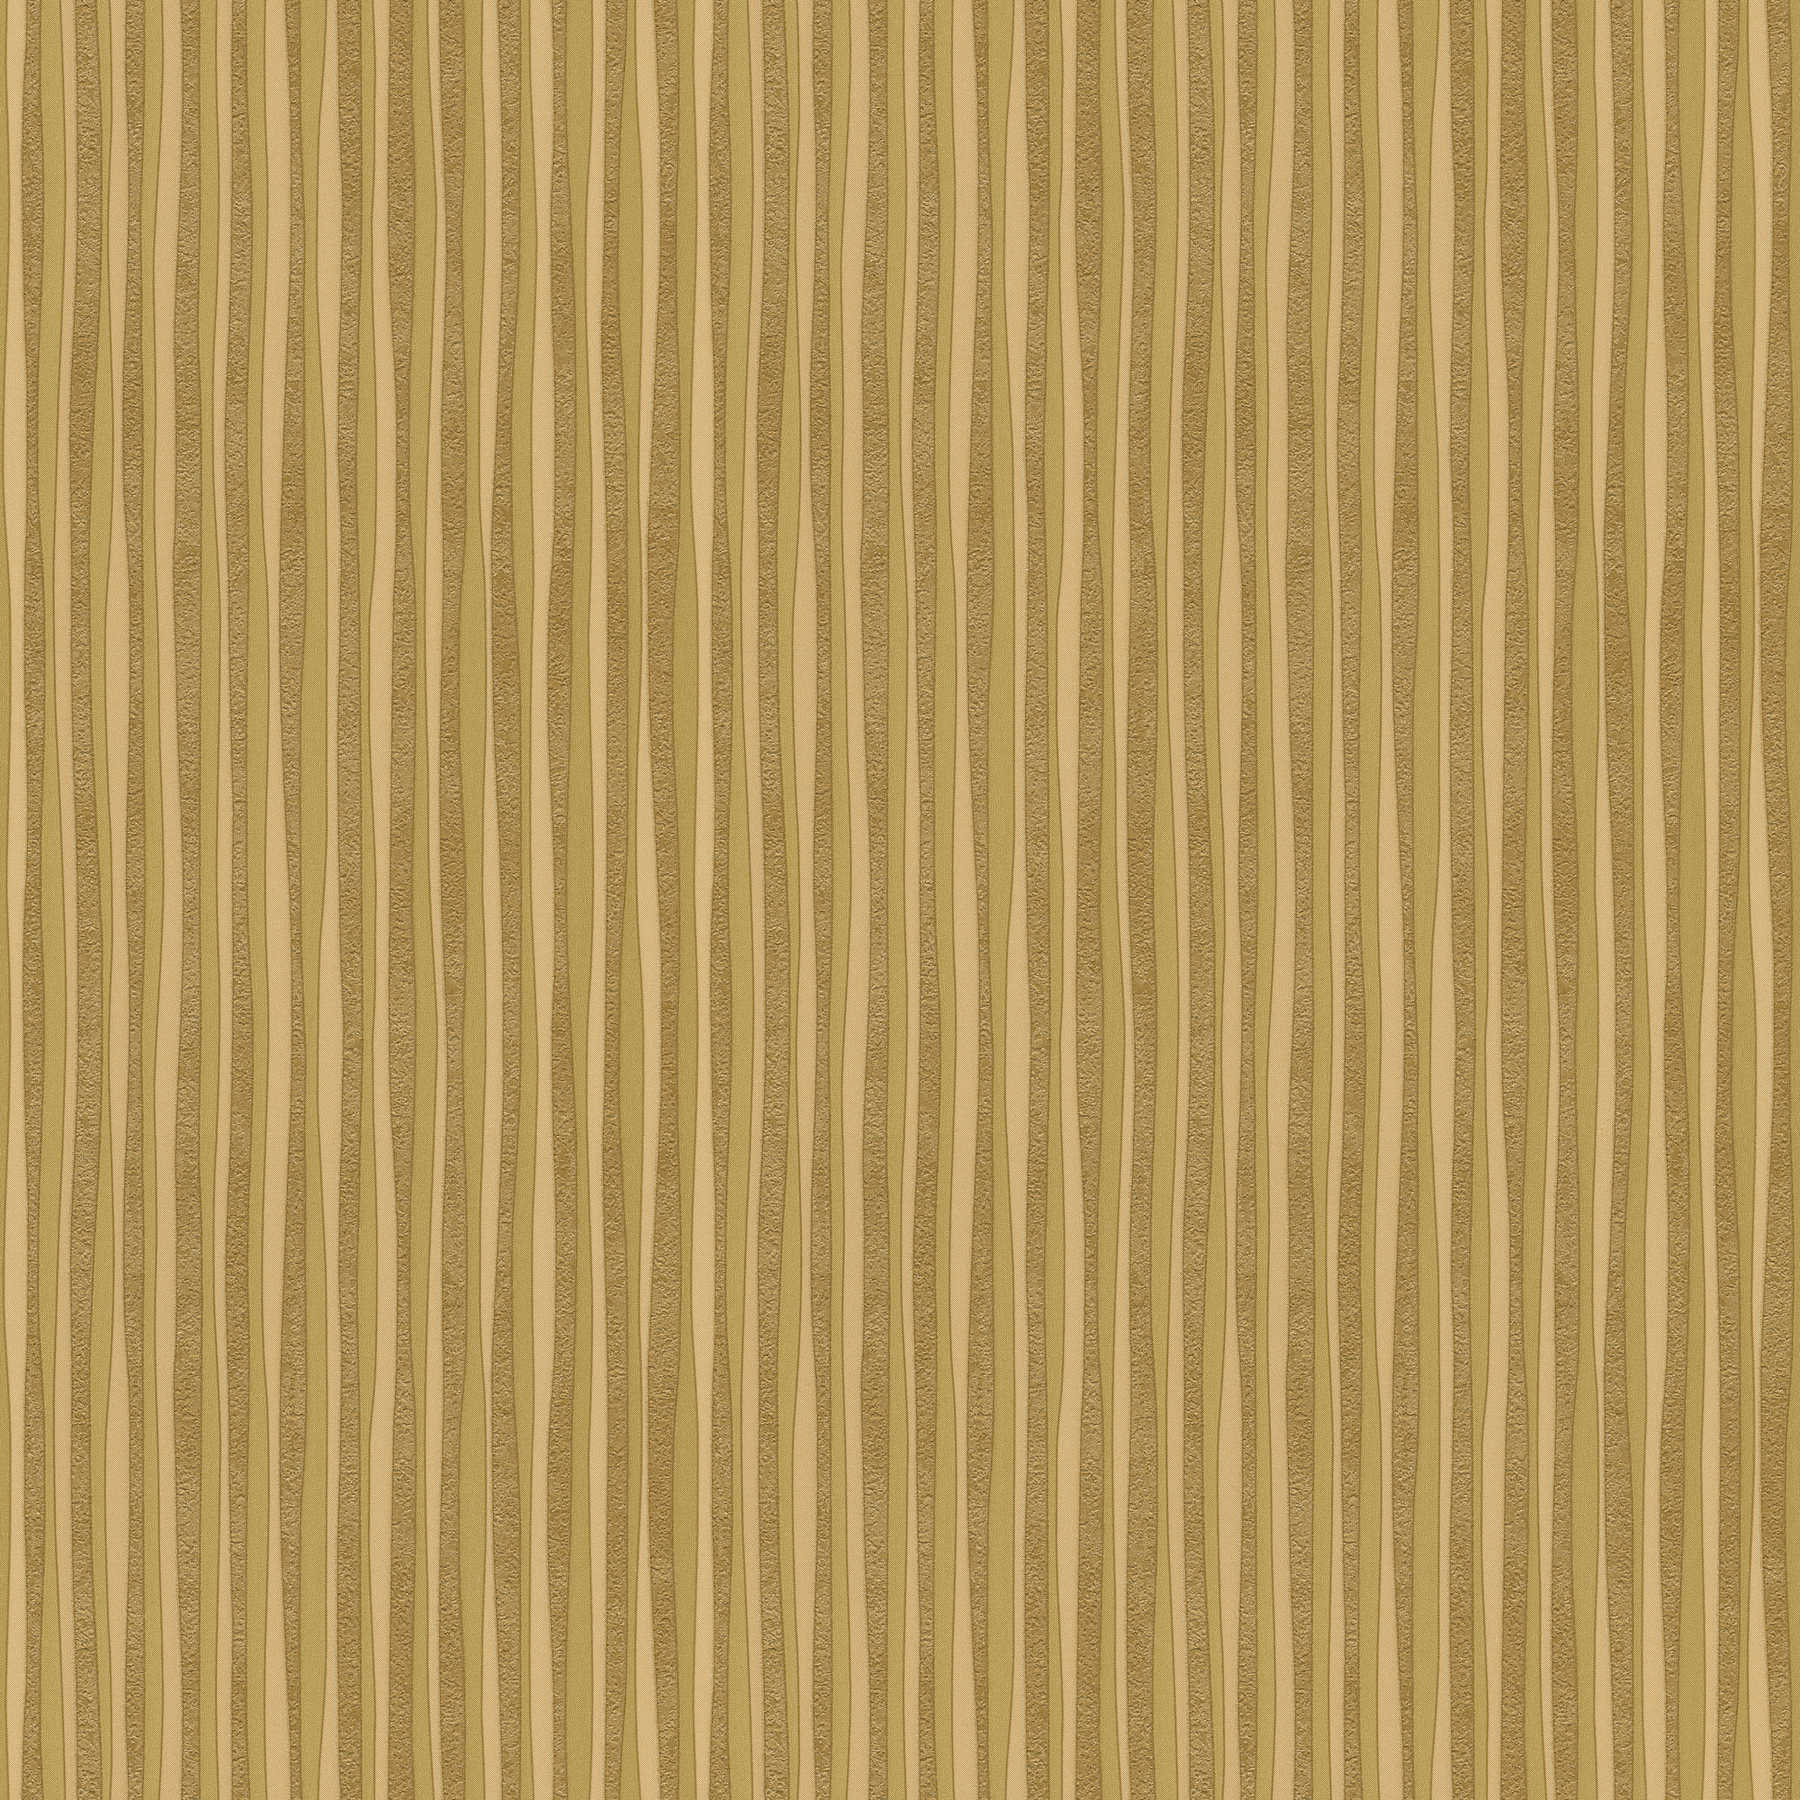 Metallic design wallpaper with line pattern in gold - metallic
